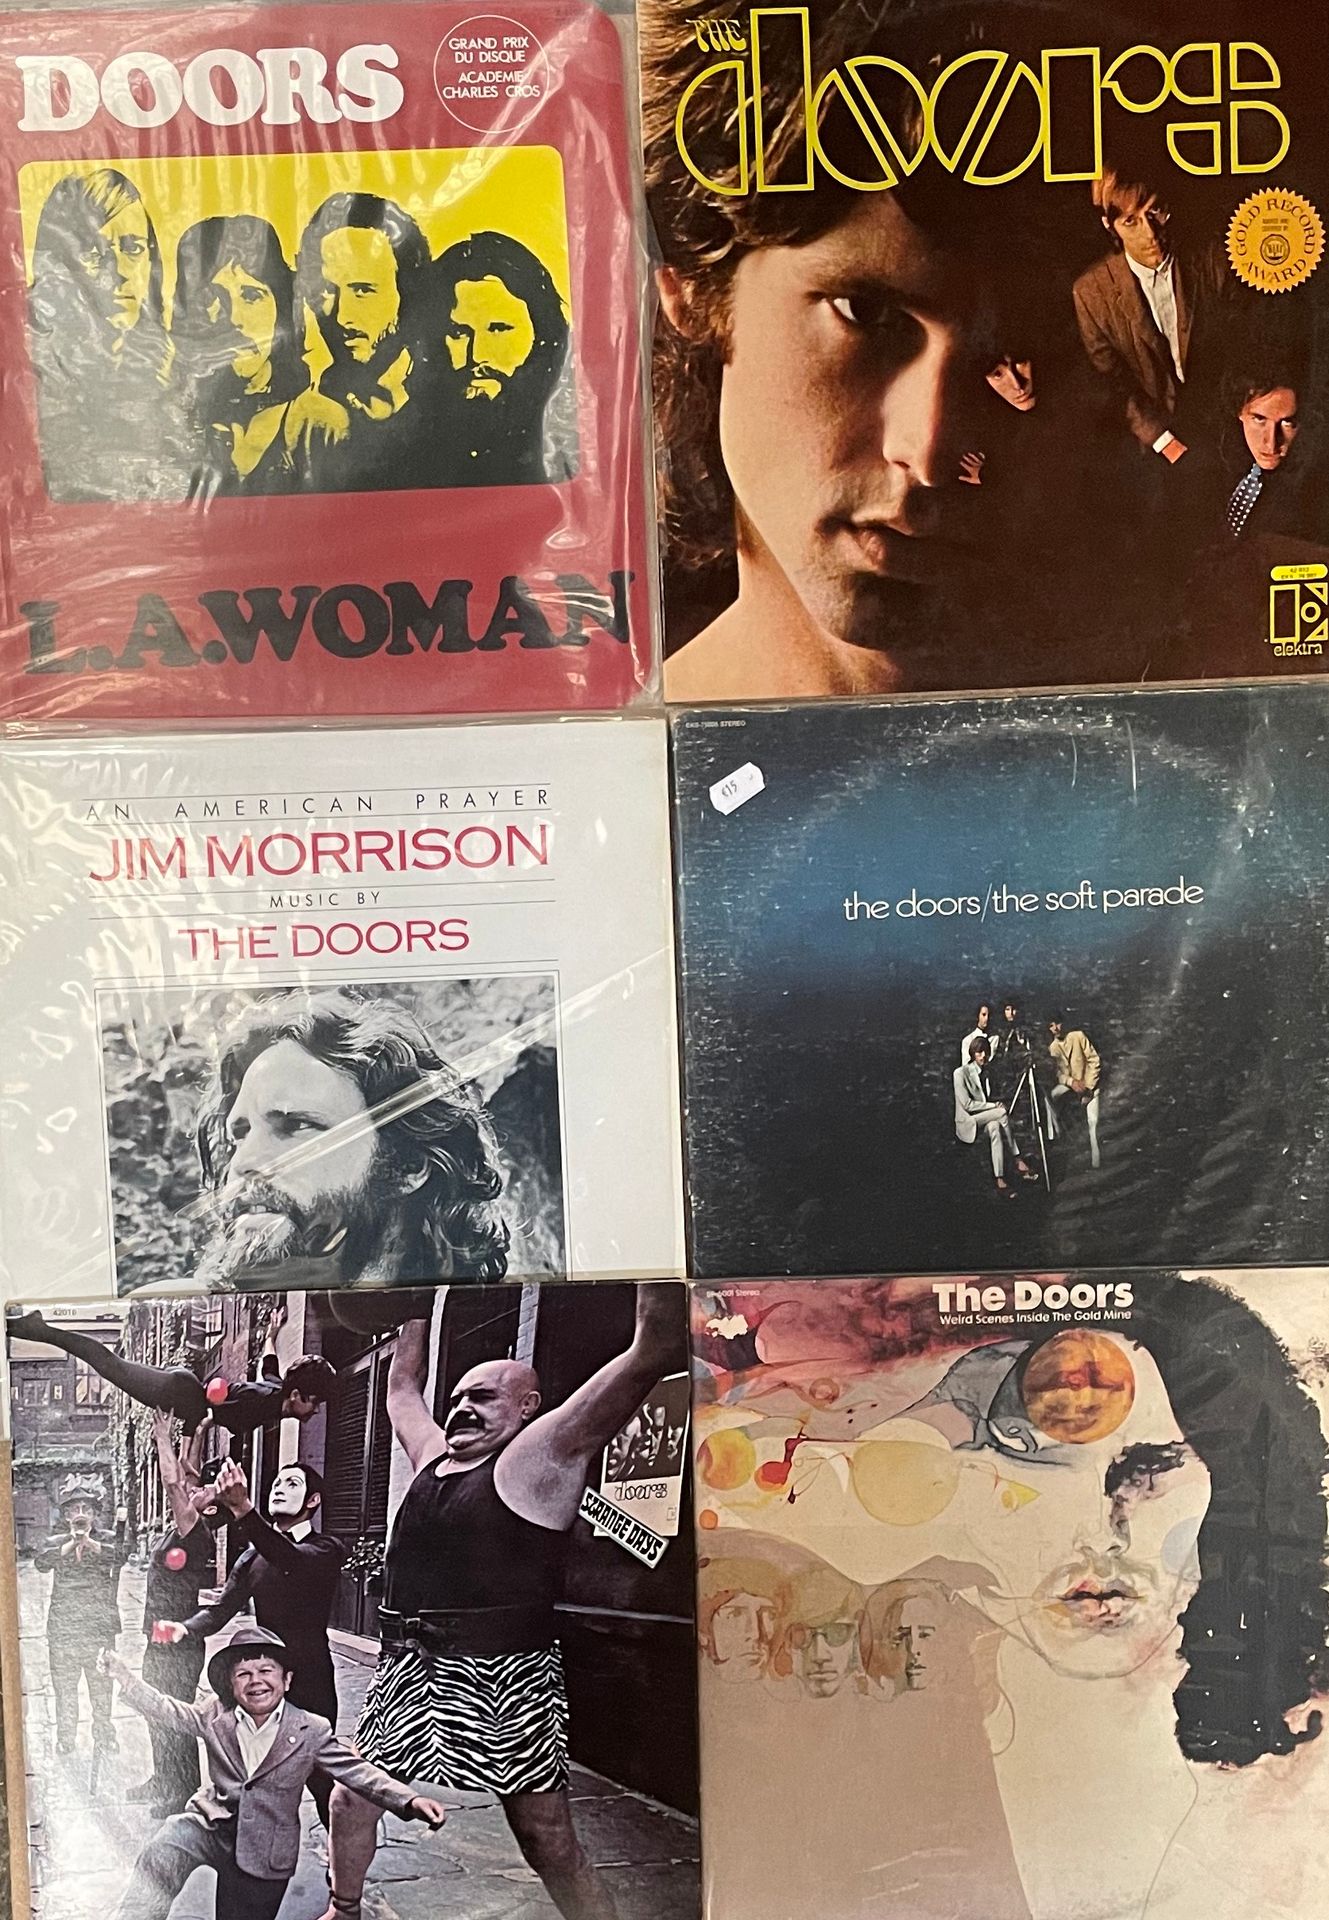 Null Seis LPs - The Doors

VG a EX; VG a EX